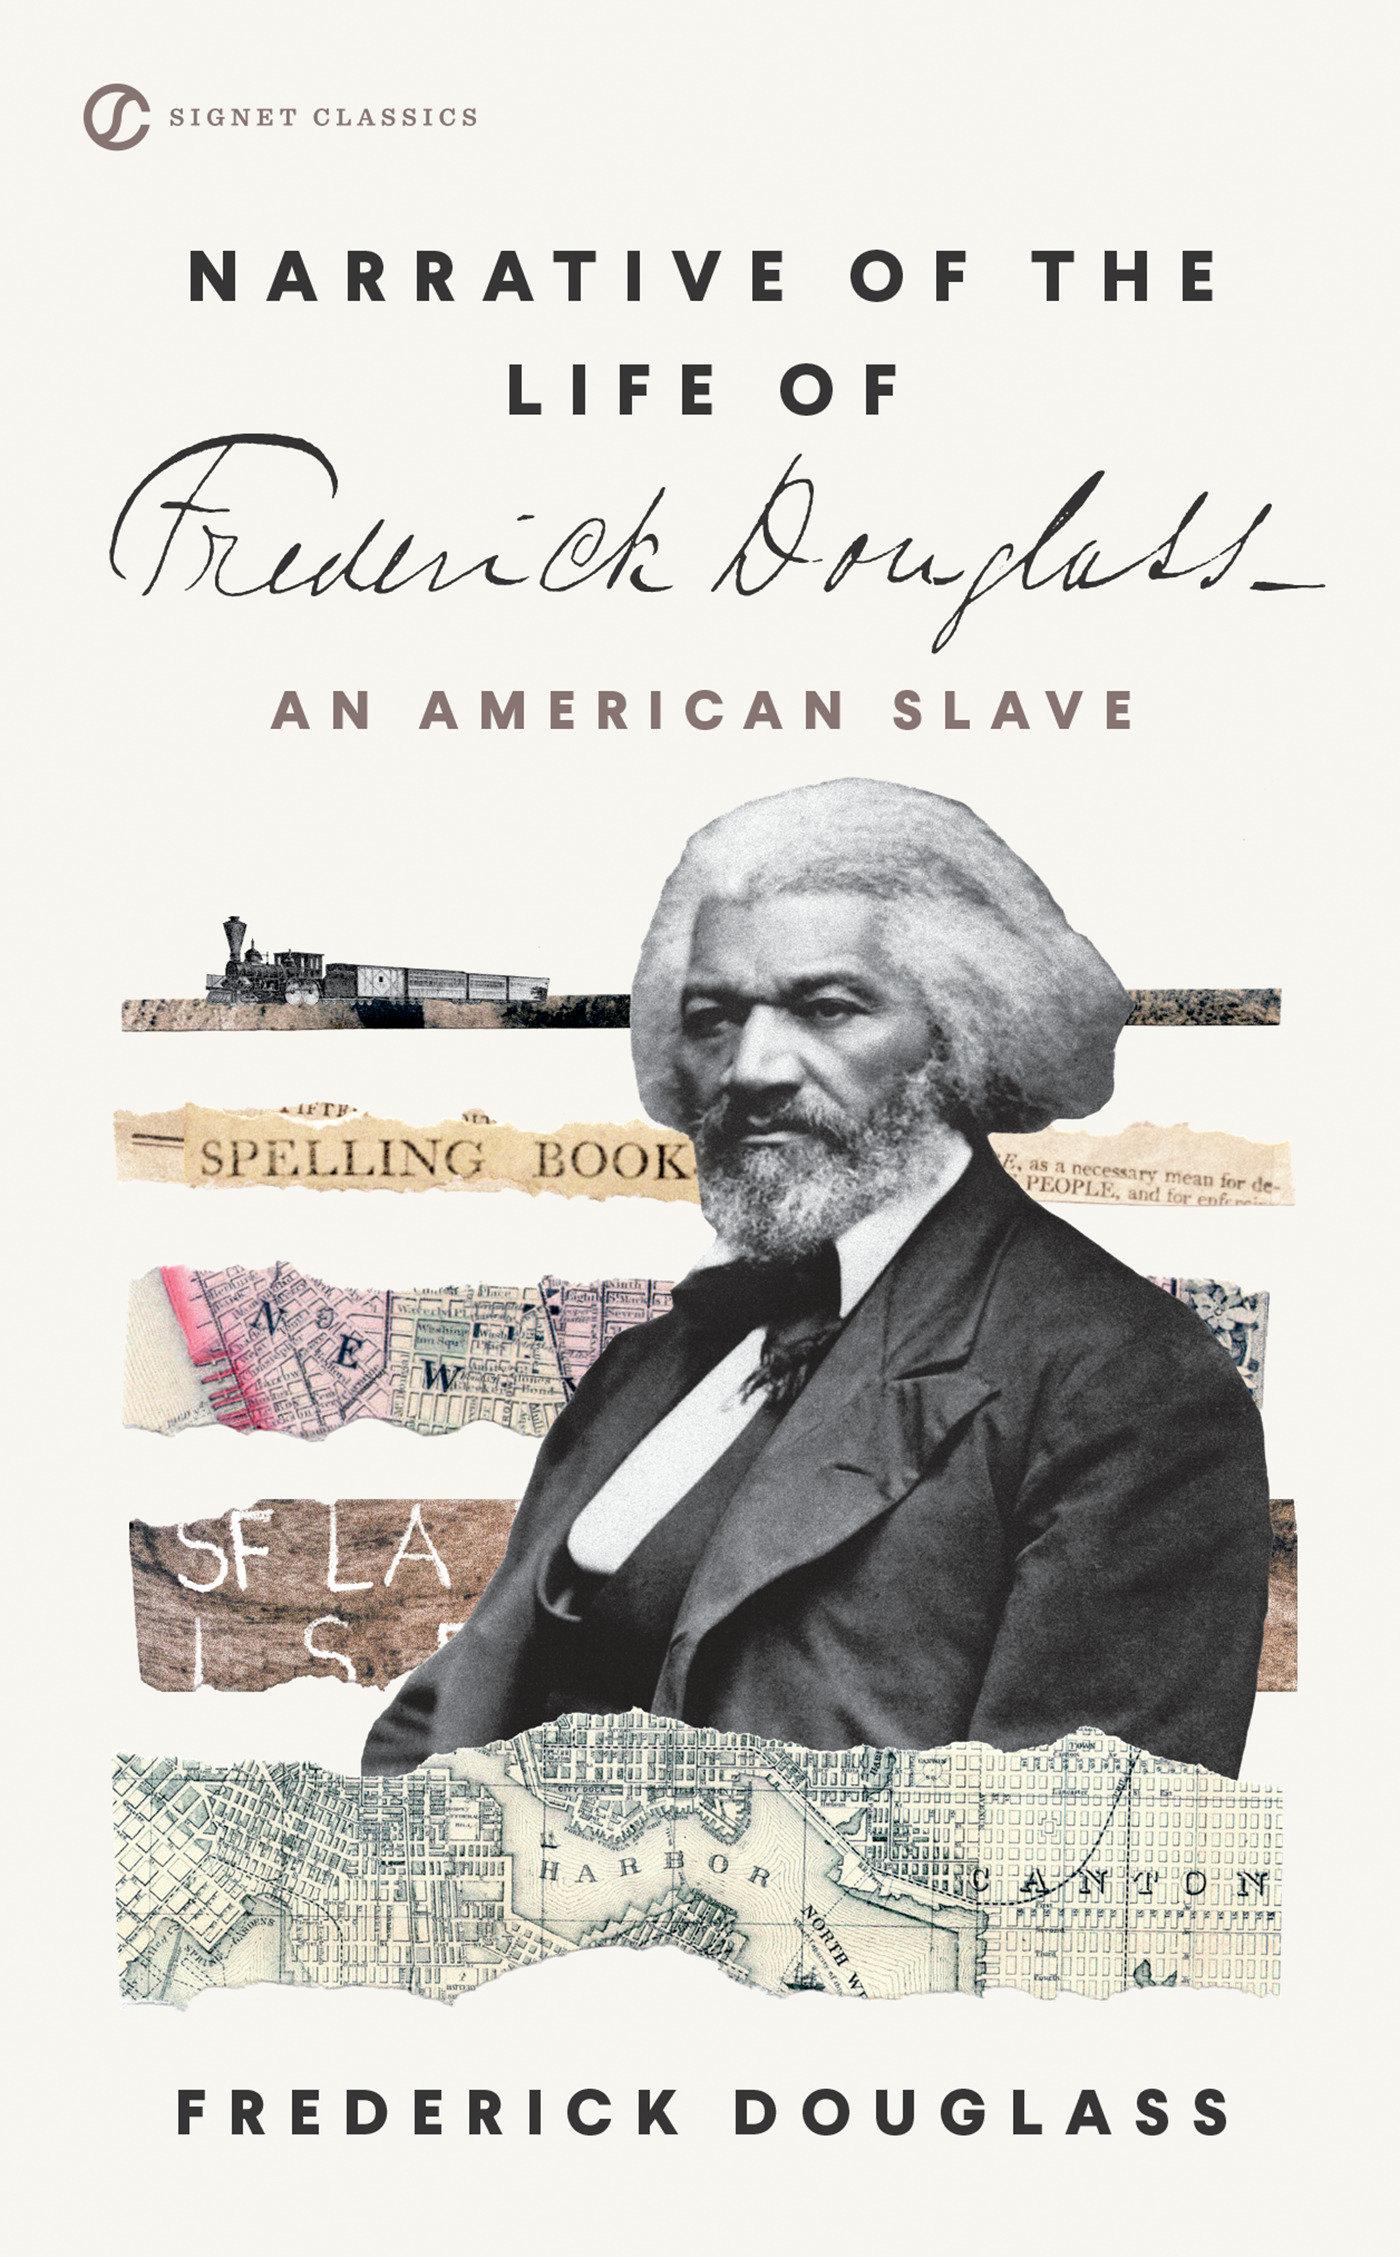 Narrative of the Life of Frederick Douglass - Frederick Douglass